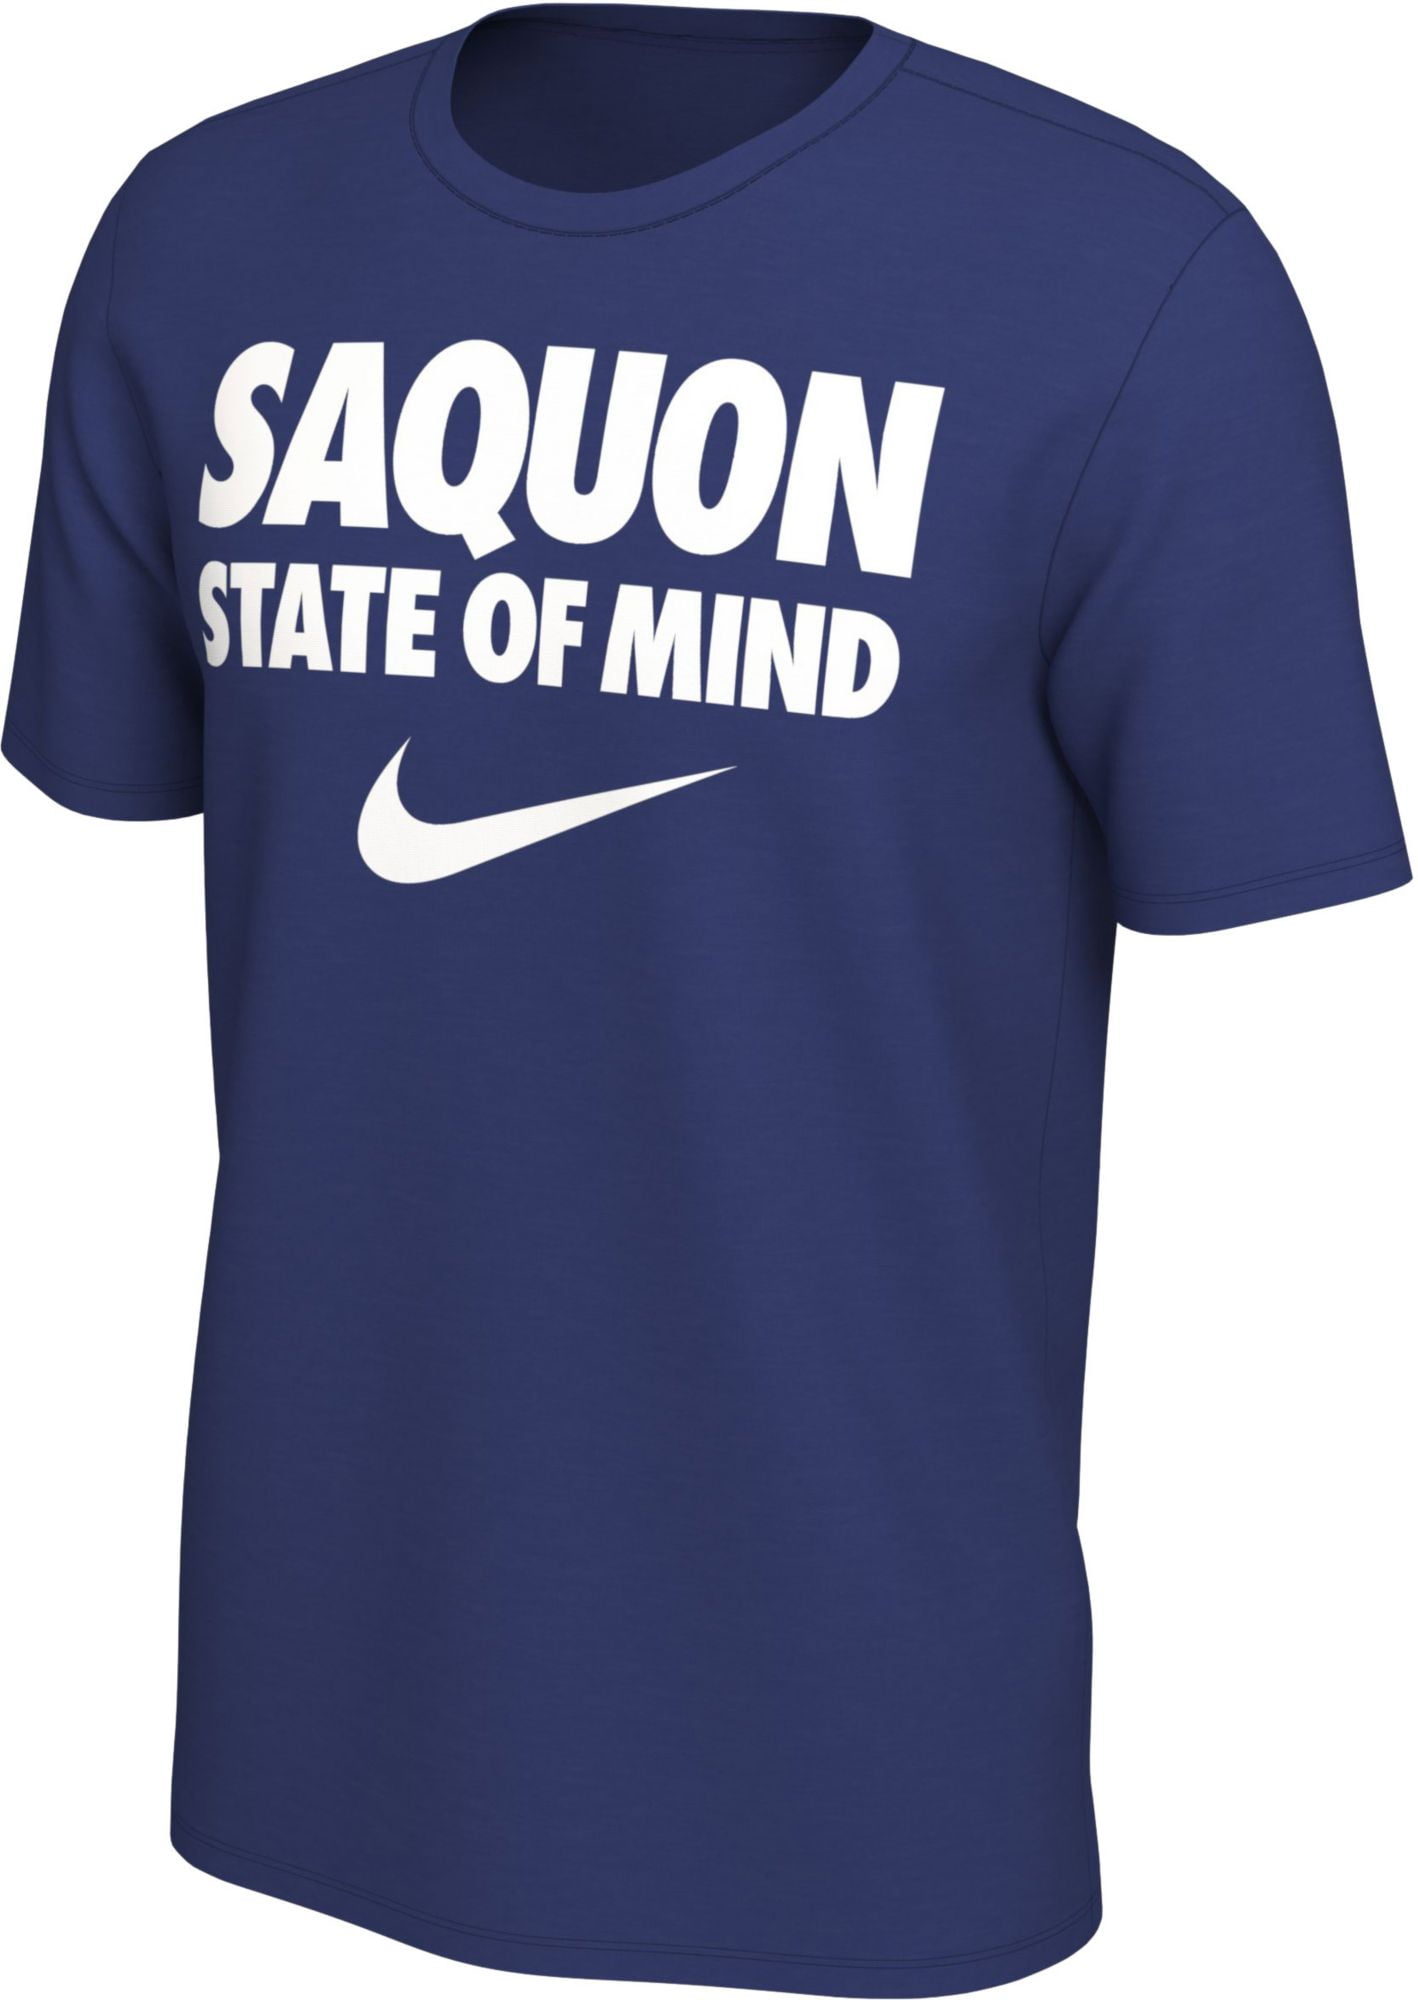 saquon shirt nike